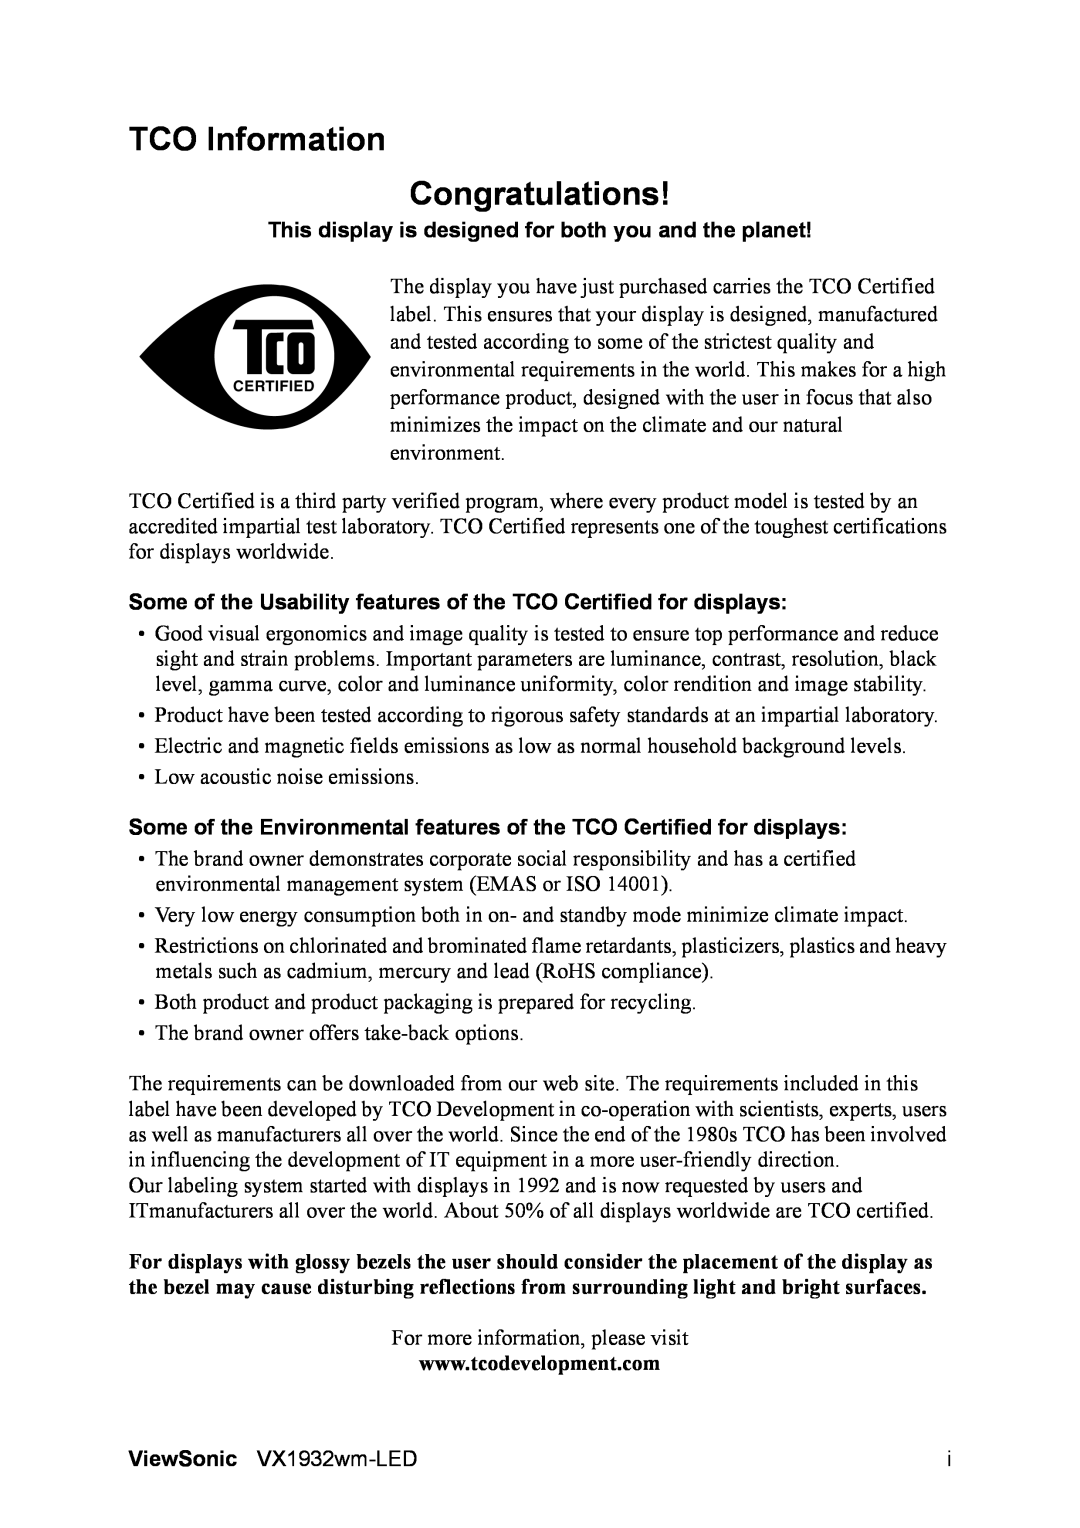 ViewSonic VX1932wm-LED warranty TCO Information Congratulations 